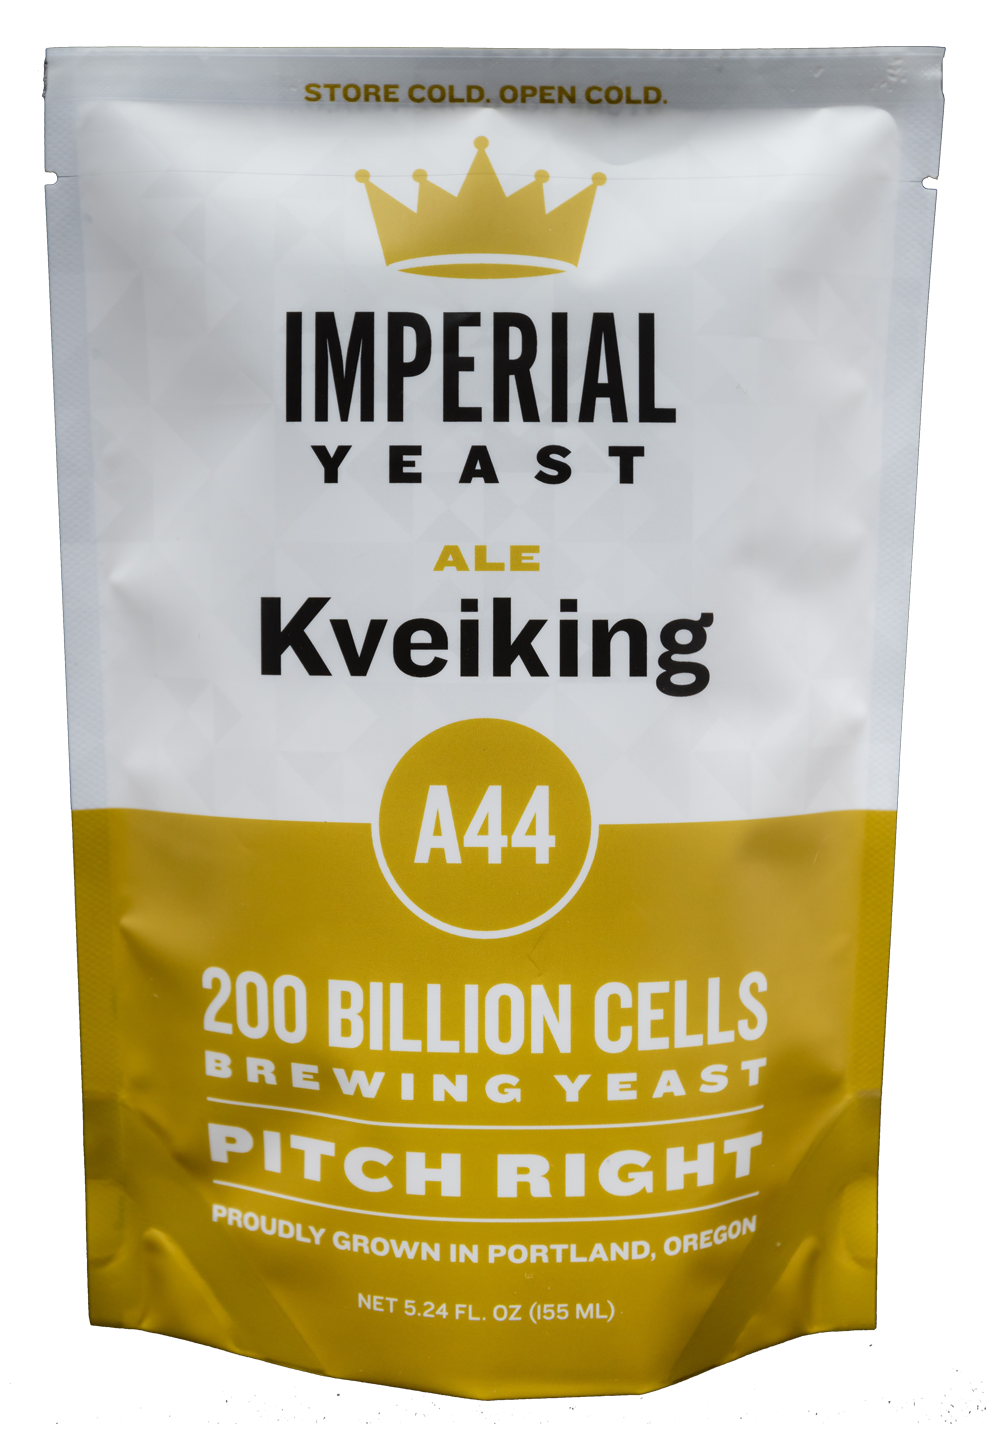 Imperial Yeast A44 Kveiking